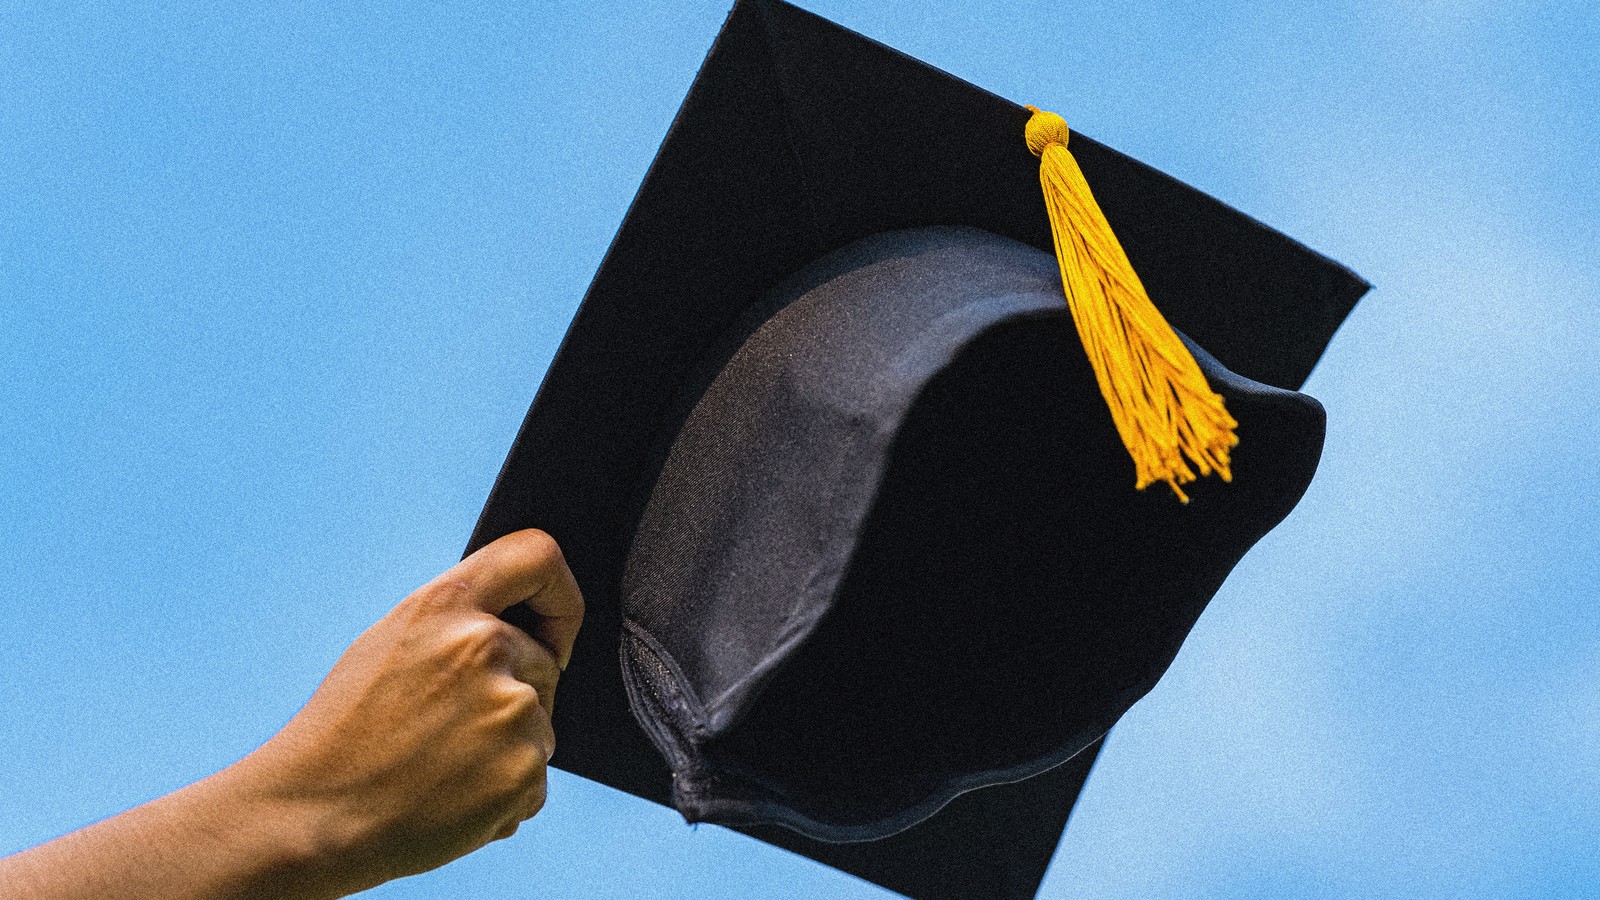 Columbia University Segregated Graduations: Woke Corruption